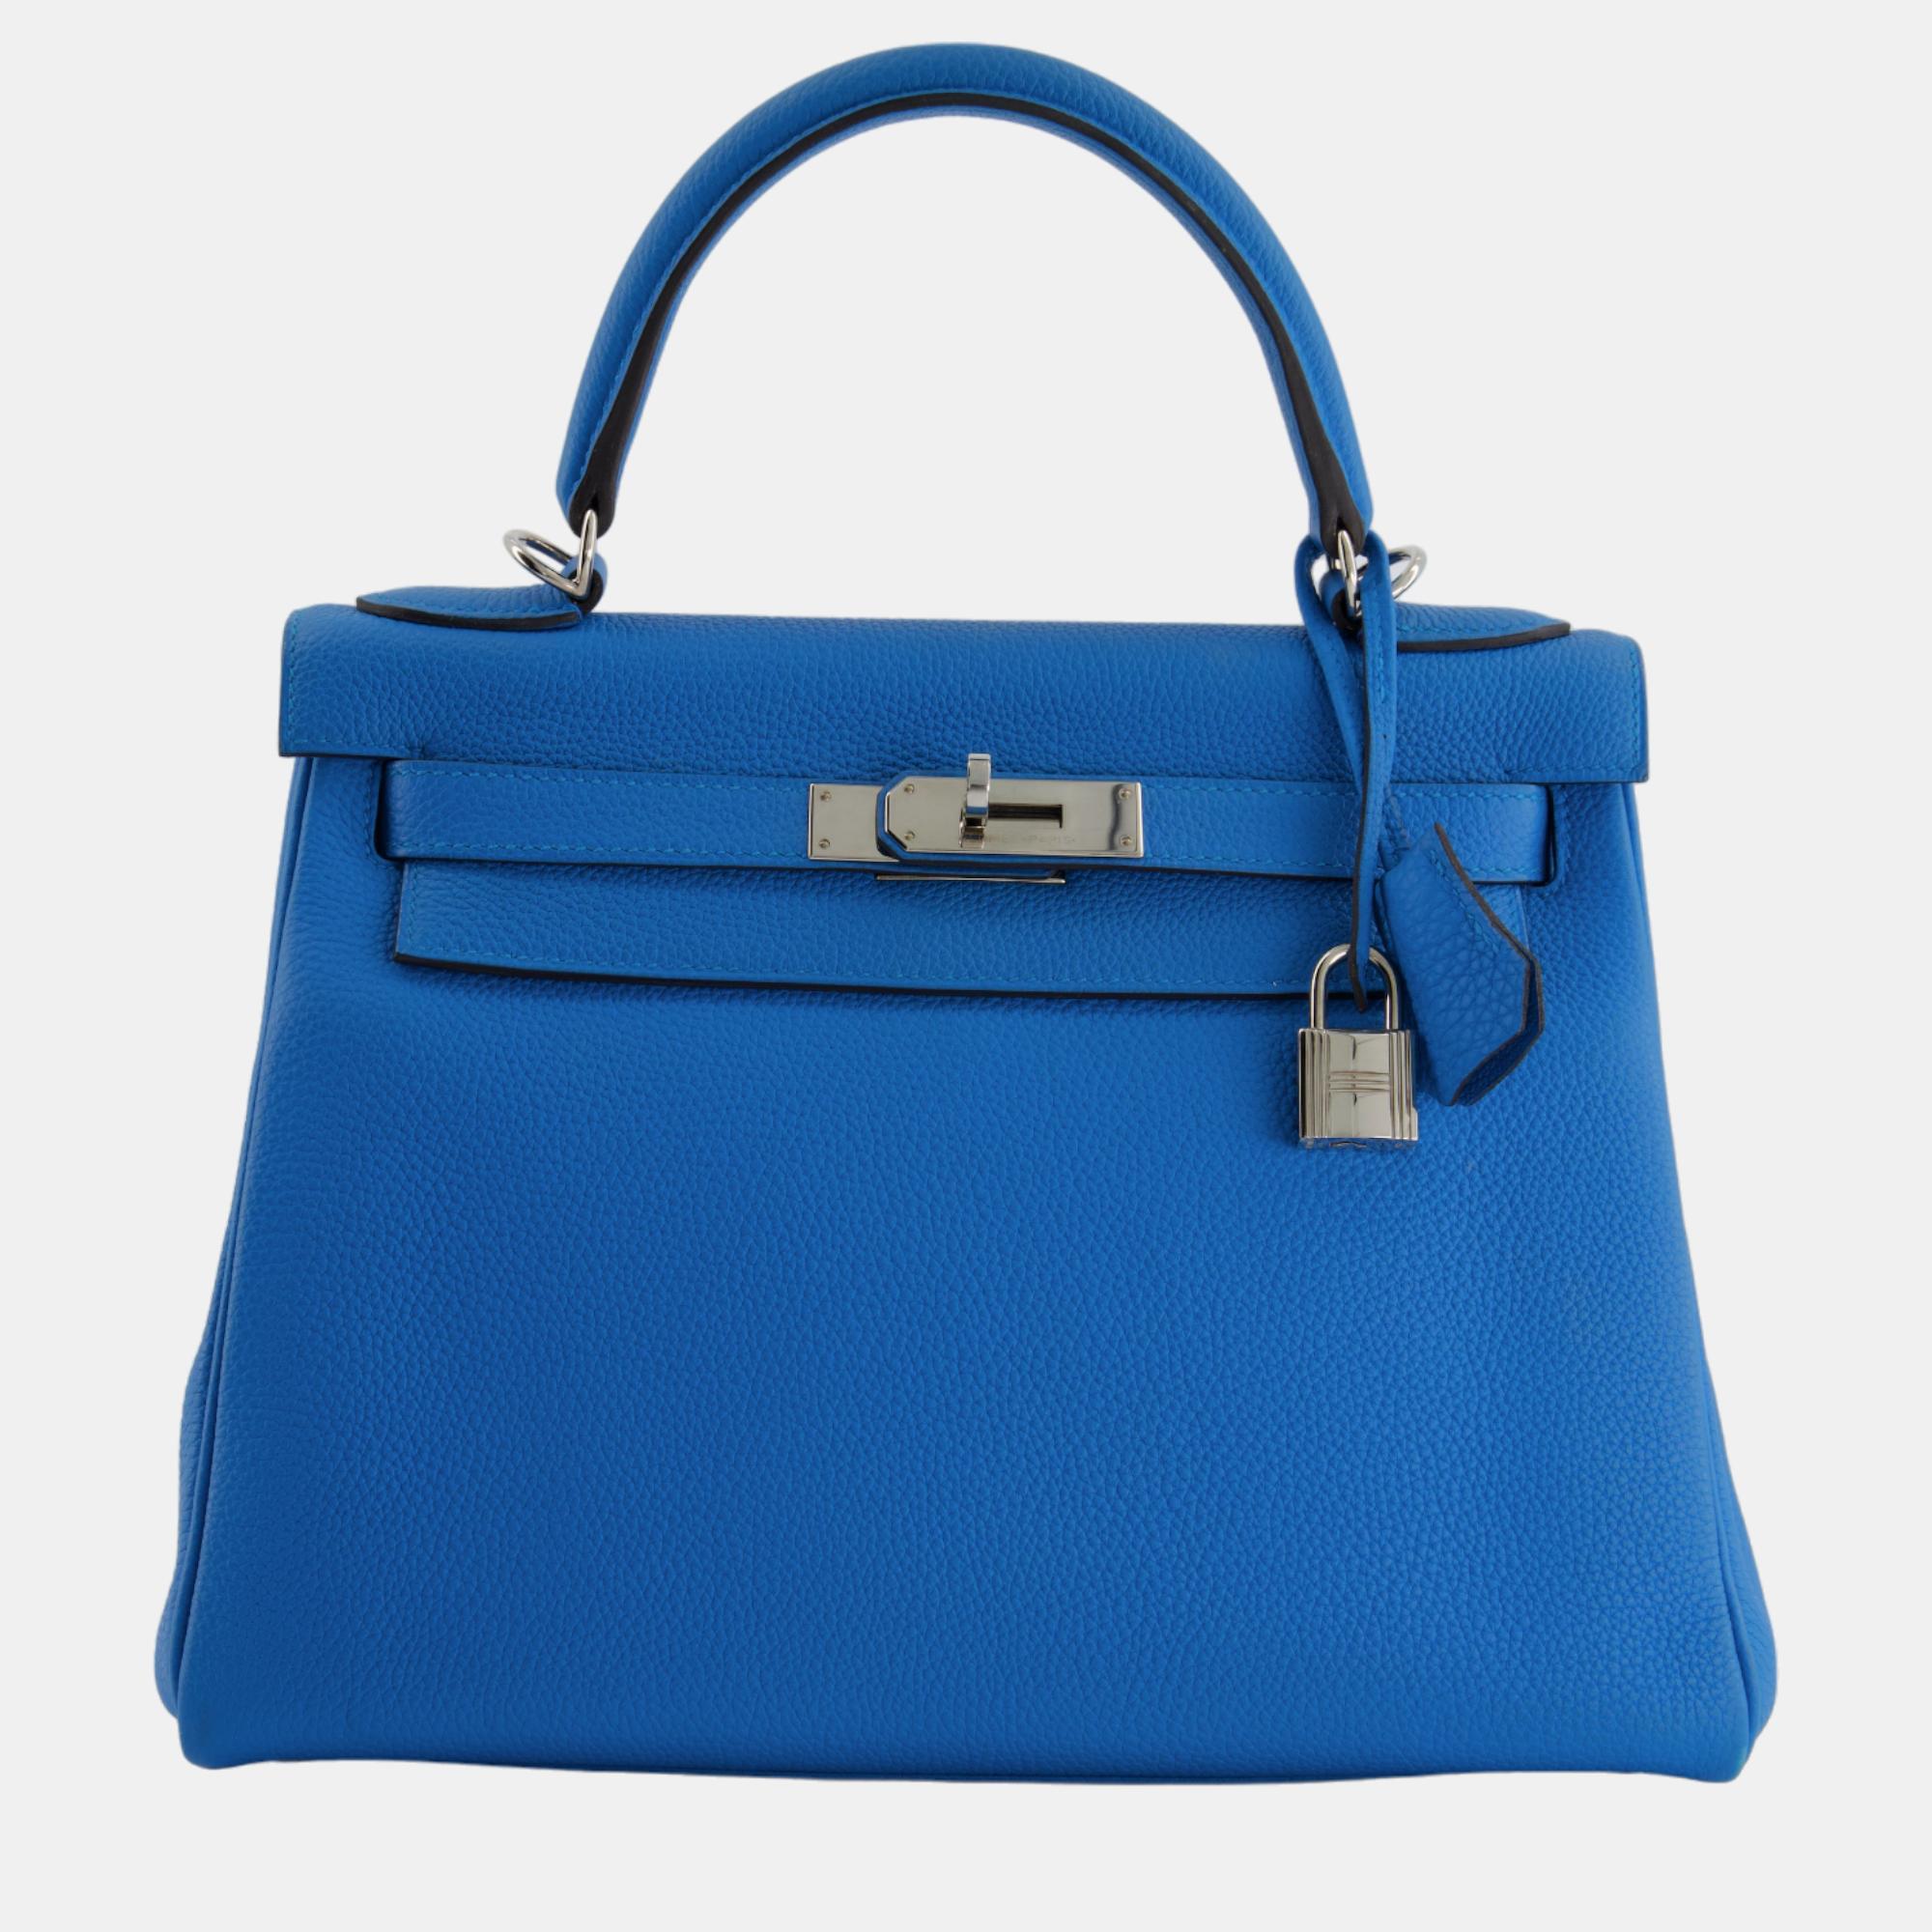 Hermes kelly retourne 28cm bag in bleu zanzibar togo leather with palladium hardware